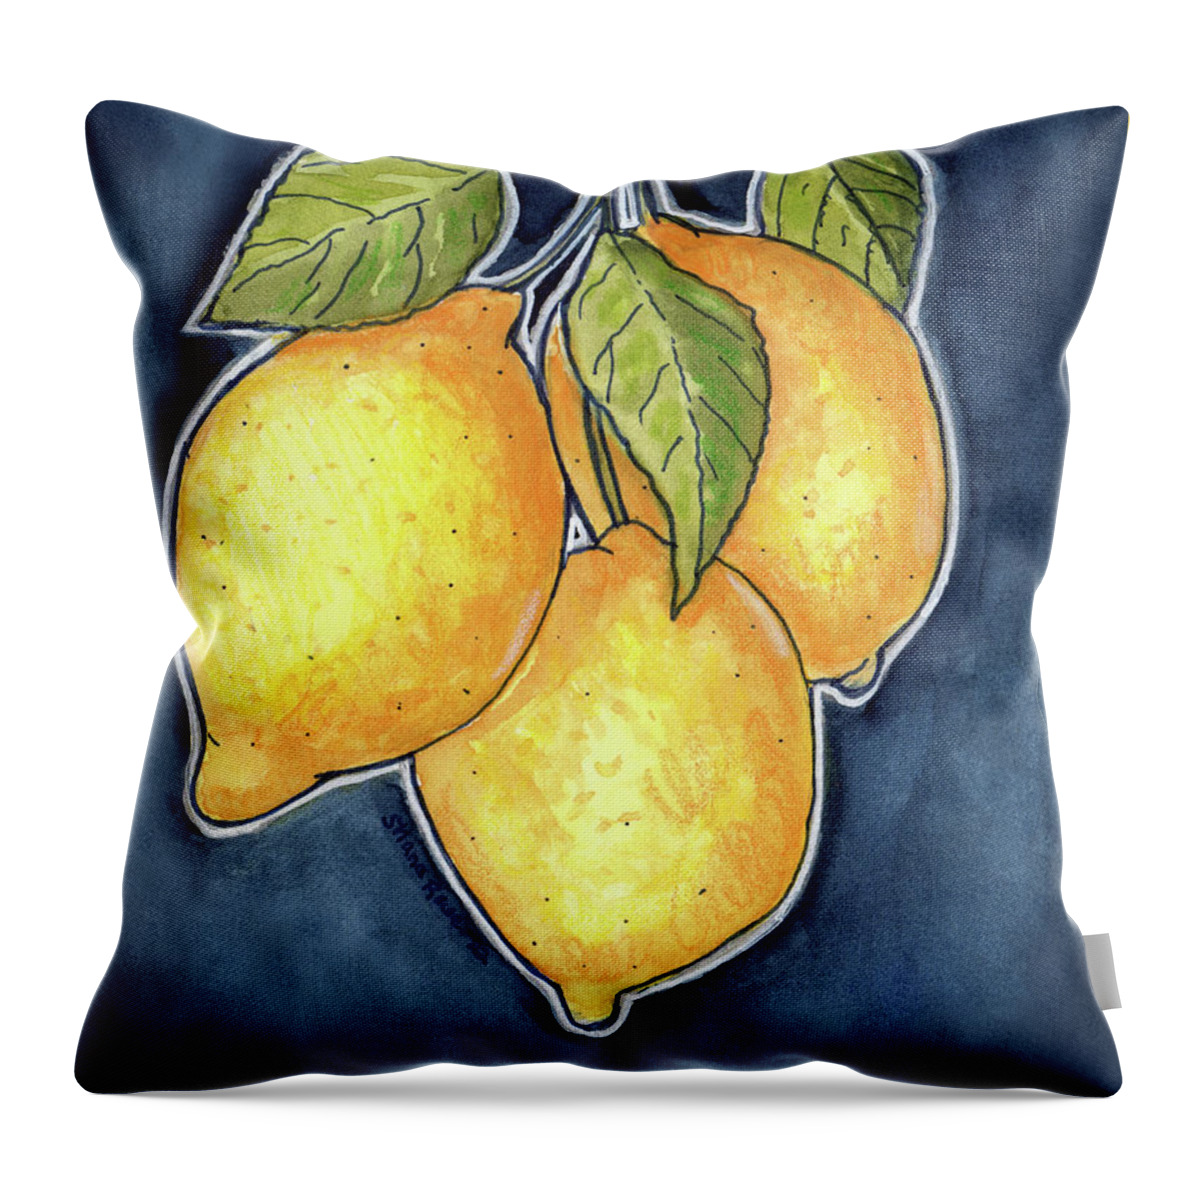 Lemons Throw Pillow featuring the painting Luscious Lemons by Shana Rowe Jackson